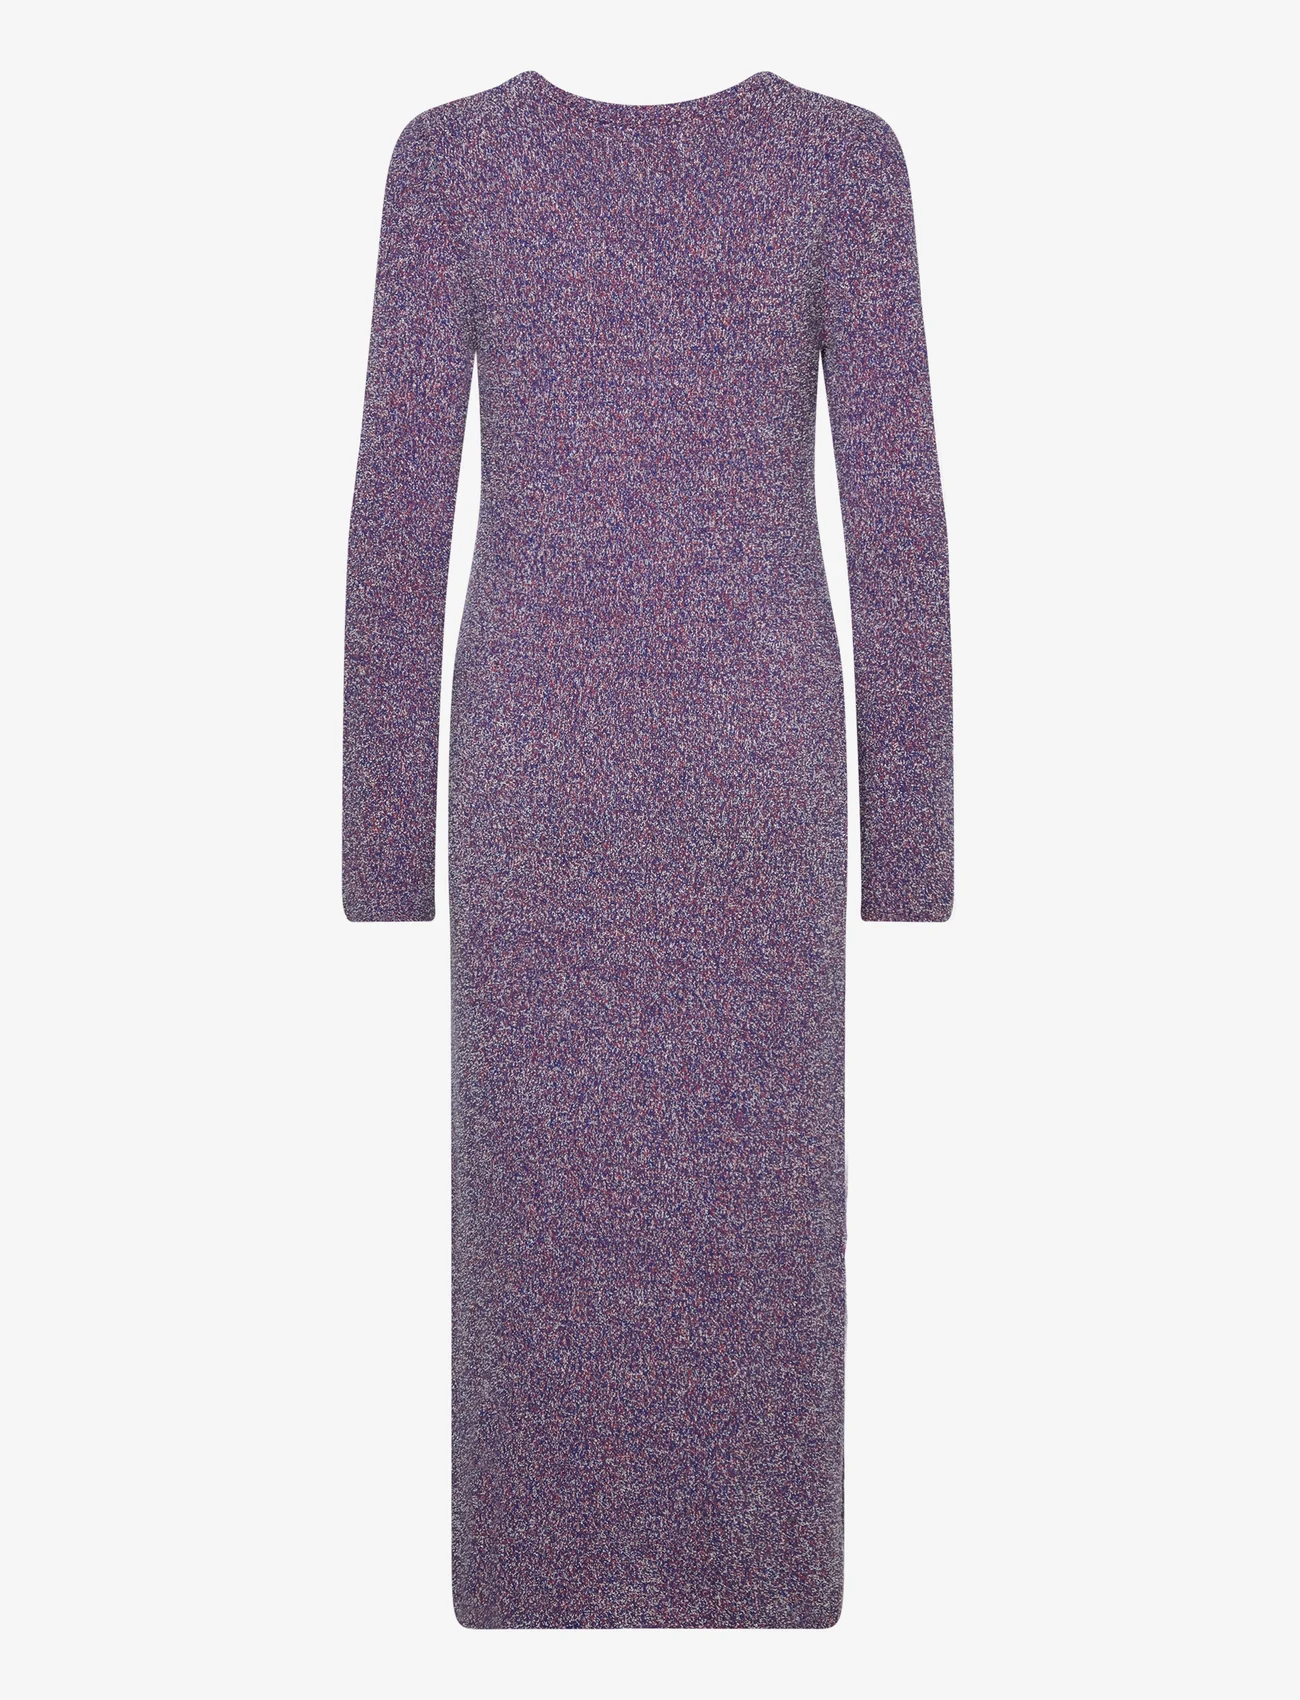 ODD MOLLY - Rose Dress - knitted dresses - purple - 1